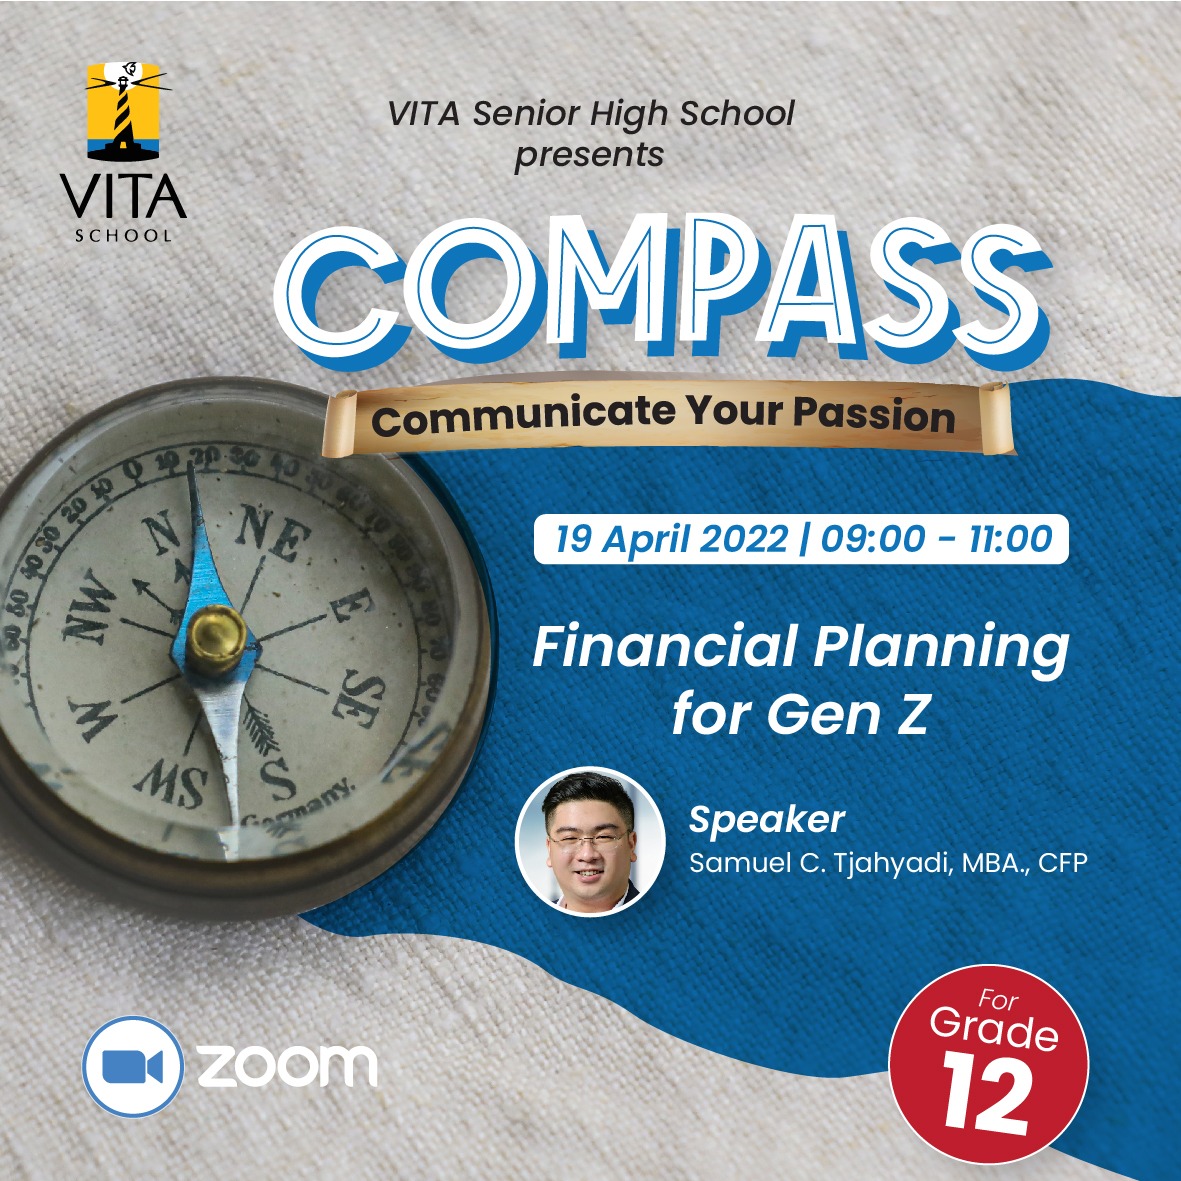 VITA Senior High COMPASS 2022 - Financial Planning for Gen Z with Samuel C. Tjahyadi, MBA., CFP